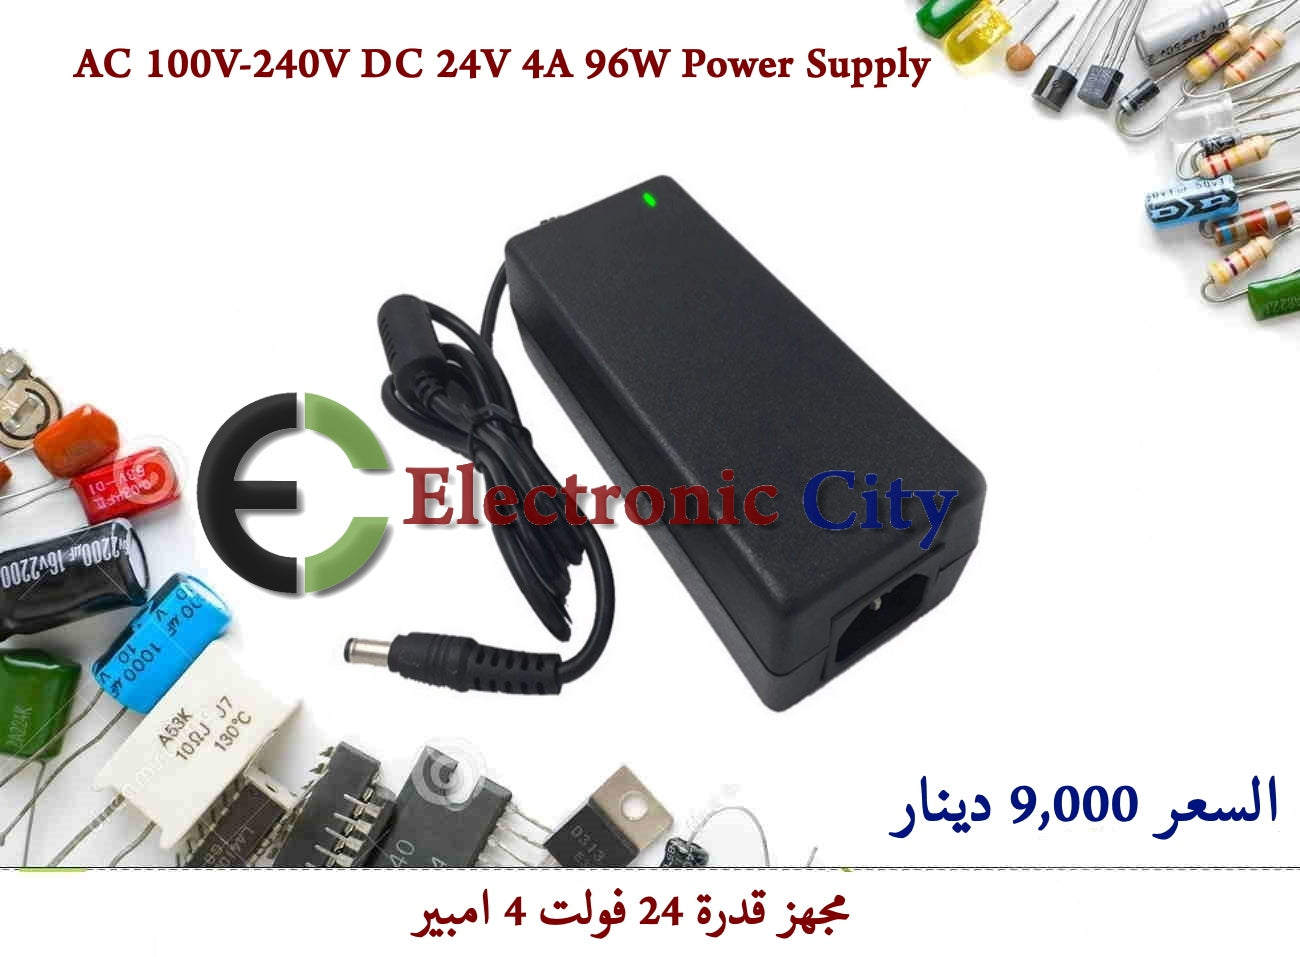 AC 100V-240V DC 24V 4A 96W Power Supply #E11.  050532